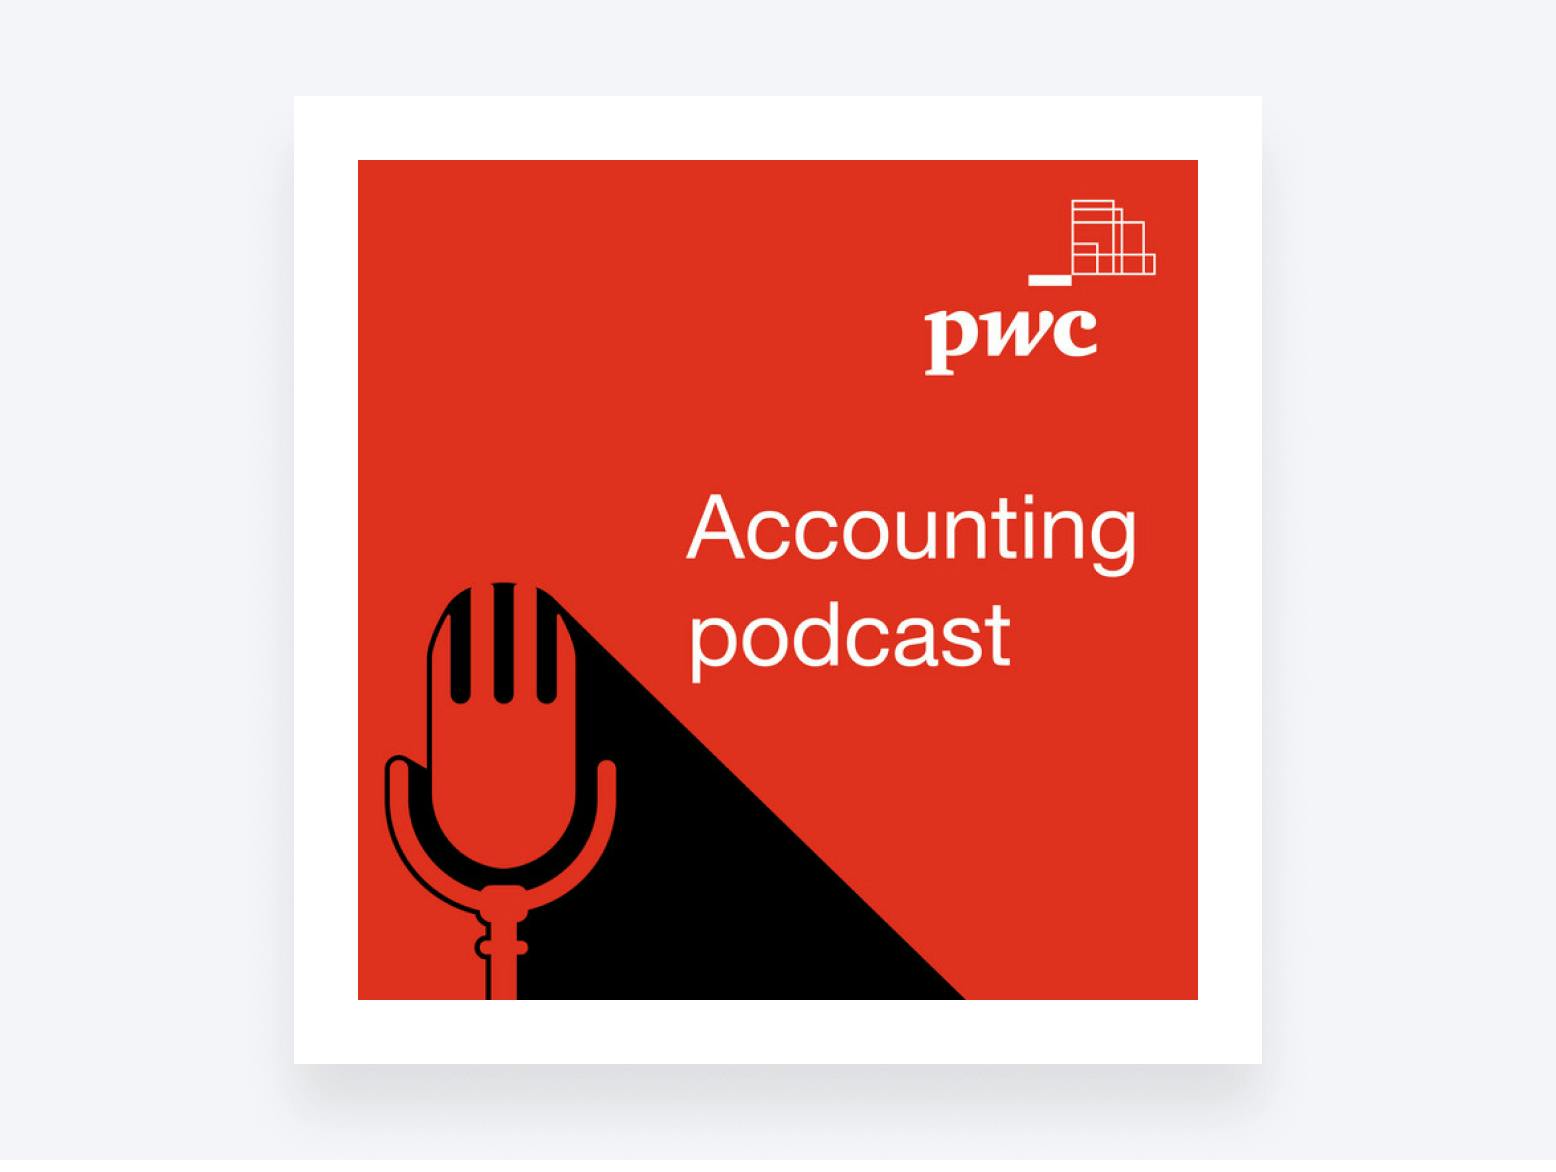 PWC’s Accounting 